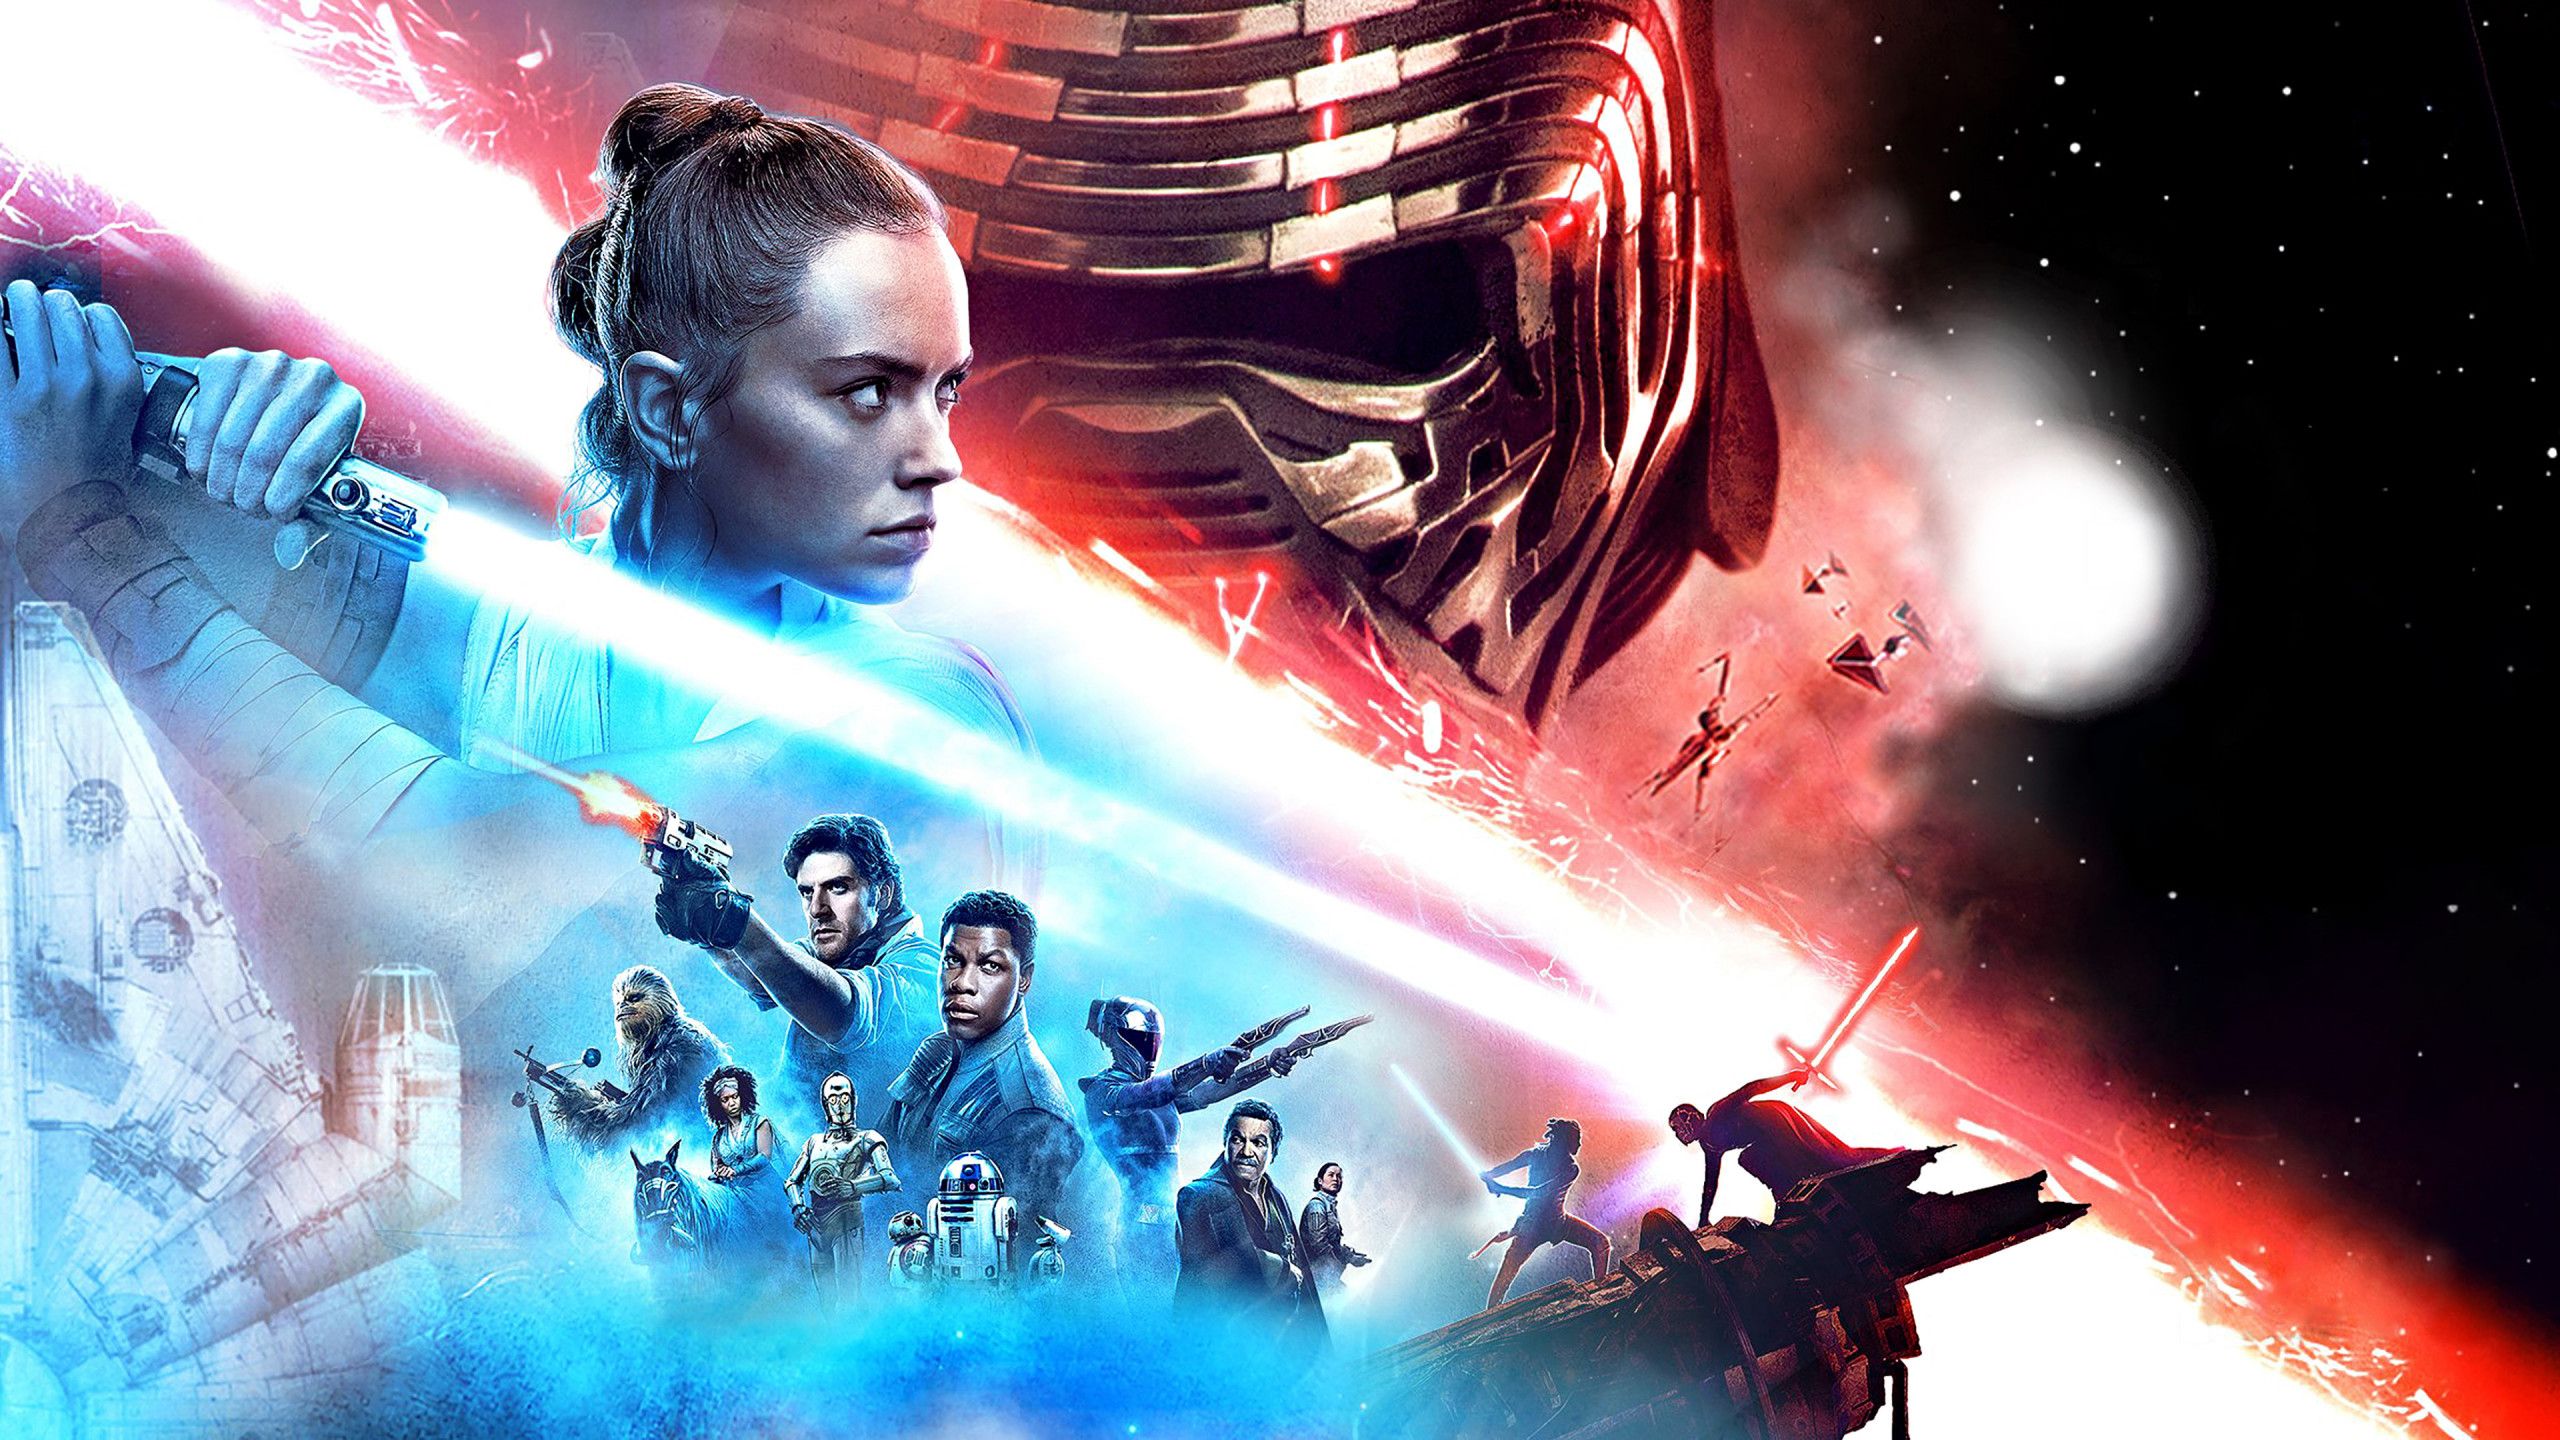 Download wallpaper: Episode IX Star Wars: The Rise of Skywalker 2560x1440